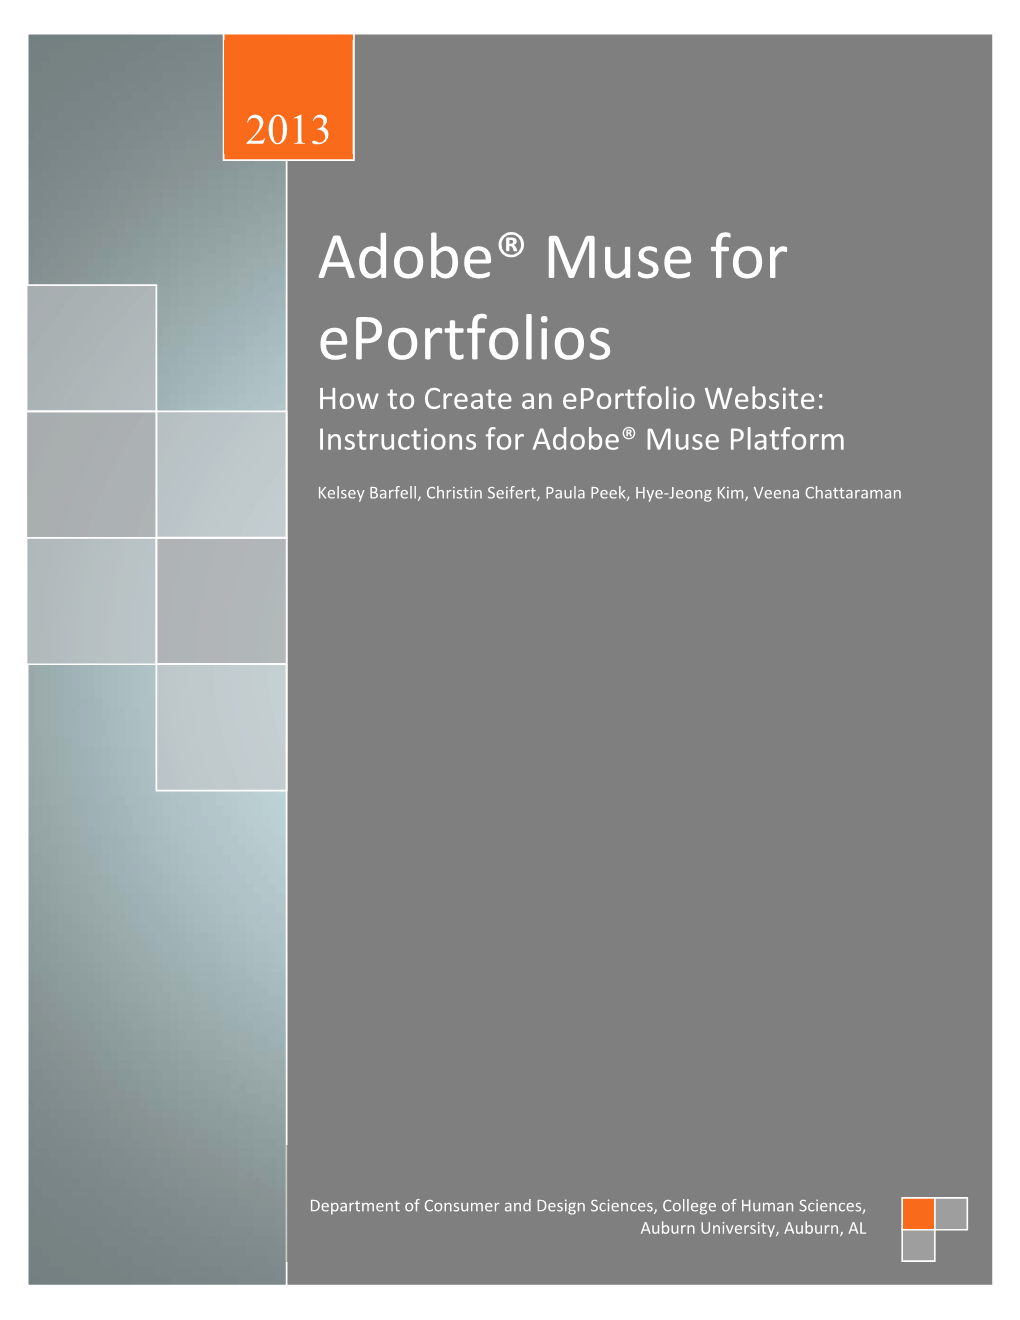 Adobe® Muse for Eportfolios How to Create an Eportfolio Website: Instructions for Adobe® Muse Platform